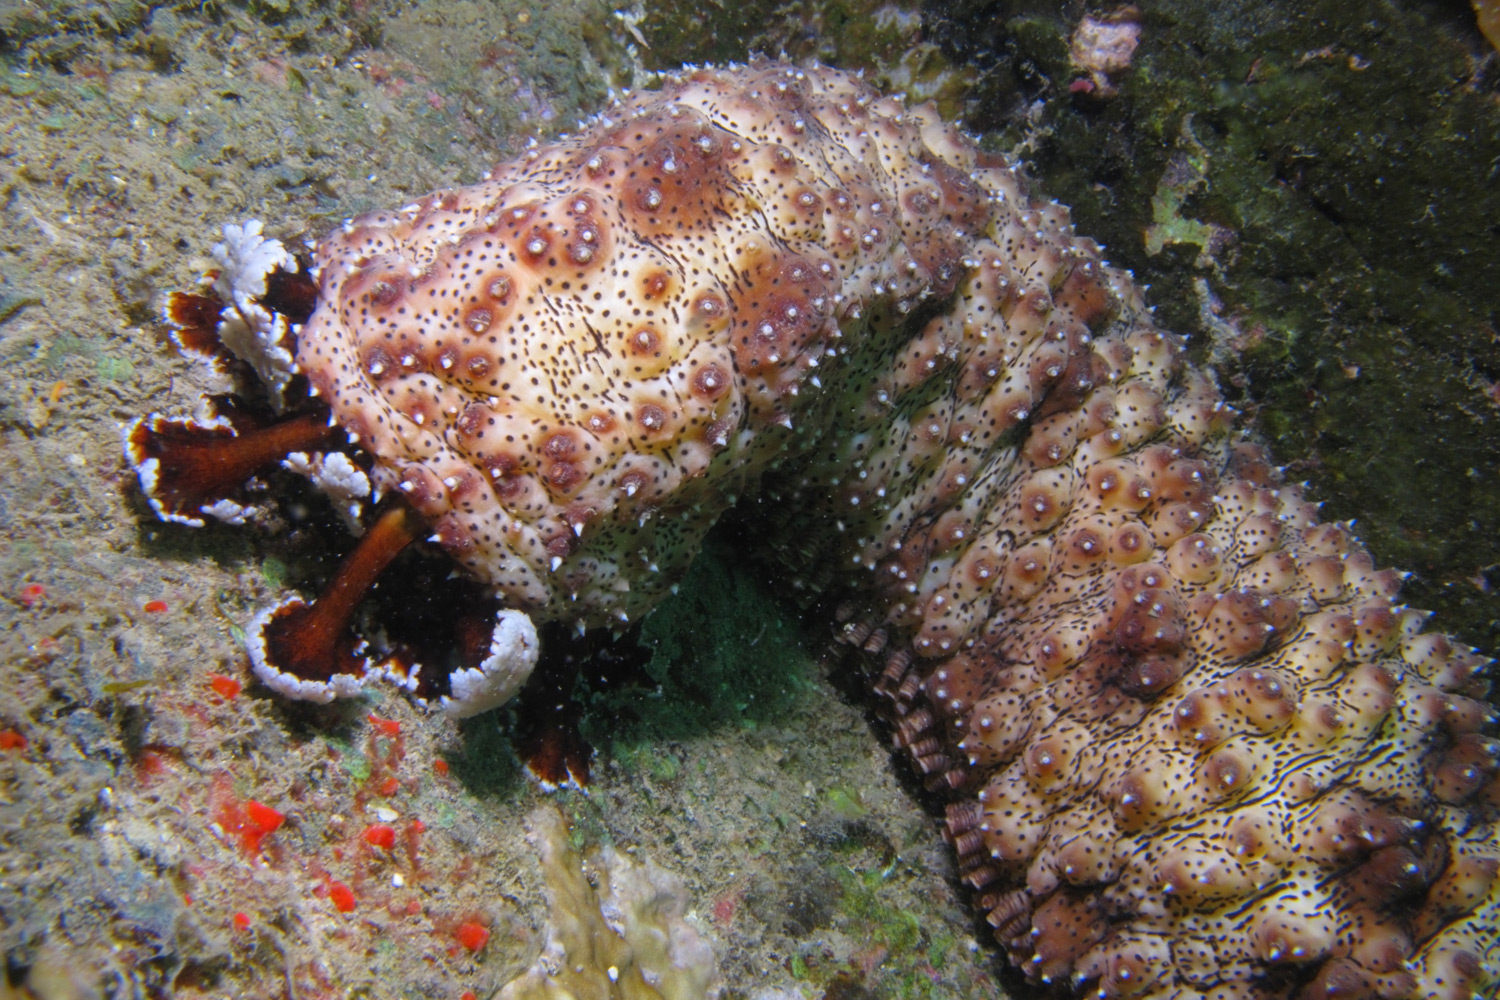 slow-moving sea cucumber